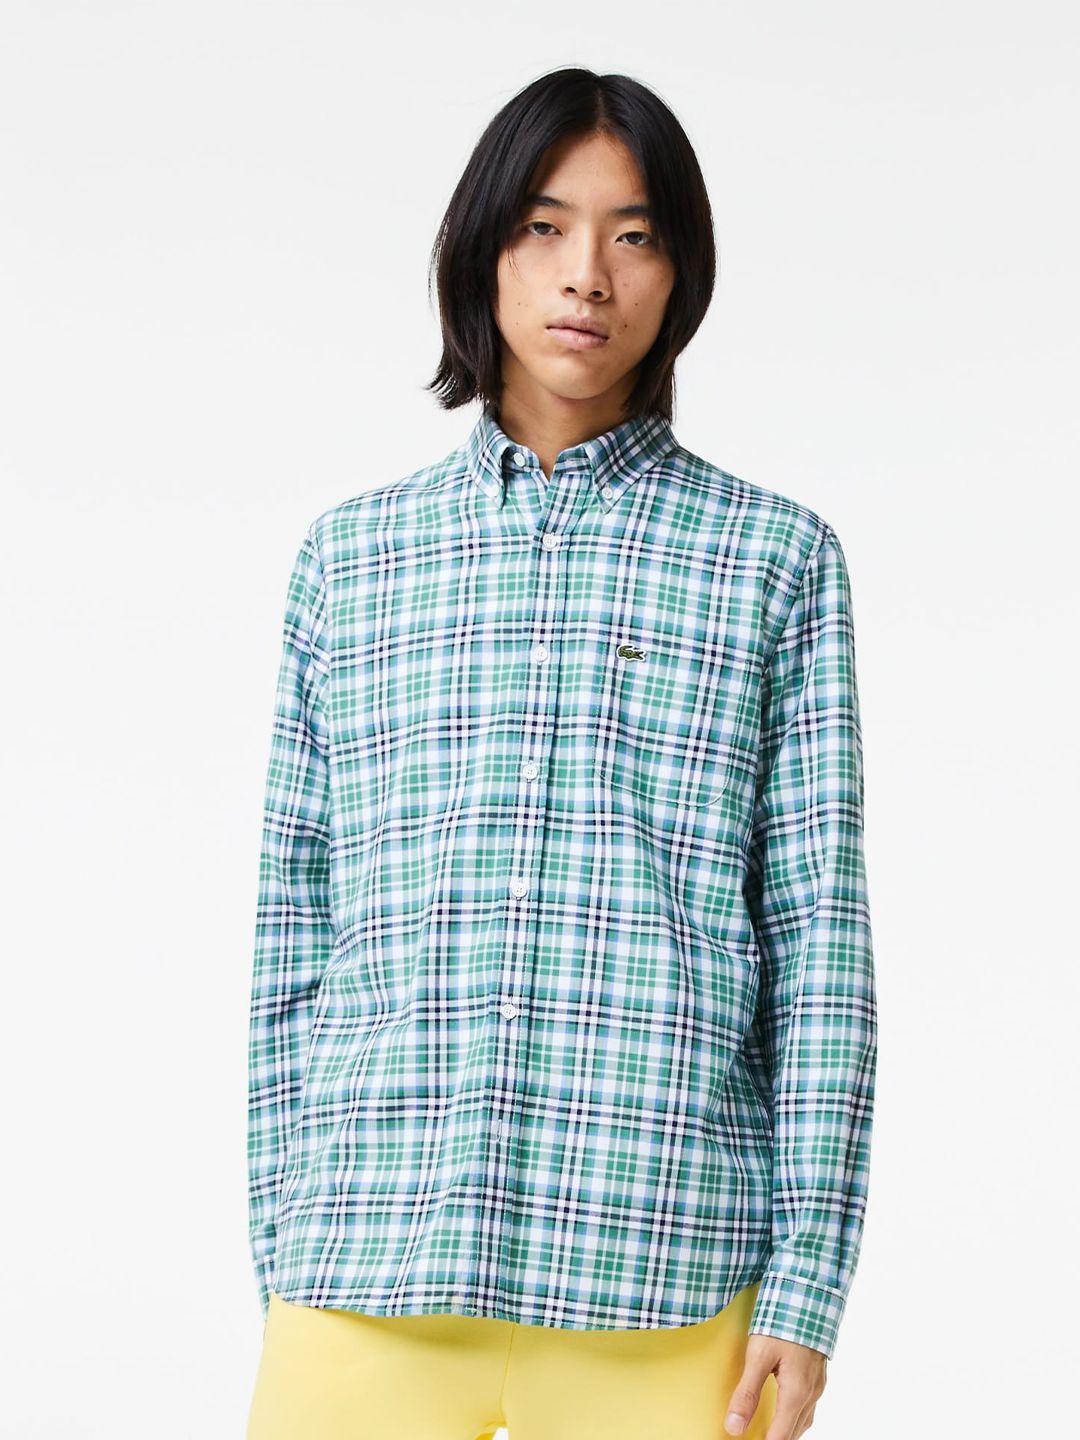 lacoste-modern-tartan-checked-pure-cotton-casual-shirt